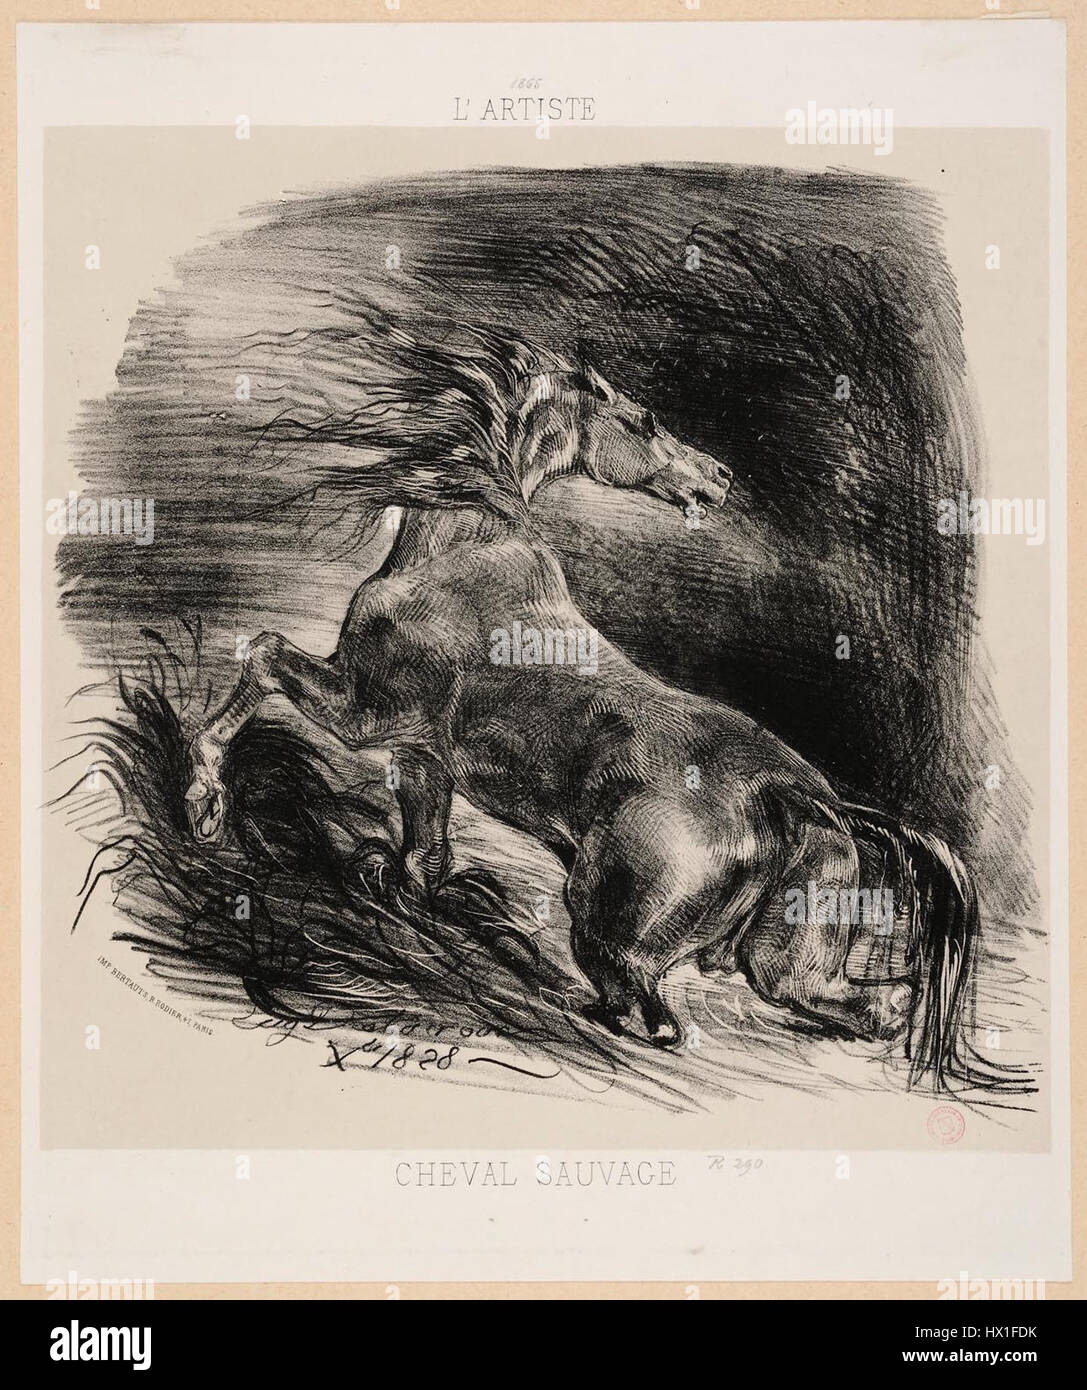 Delacroix Cheval sauvage 1828 Stock Photo